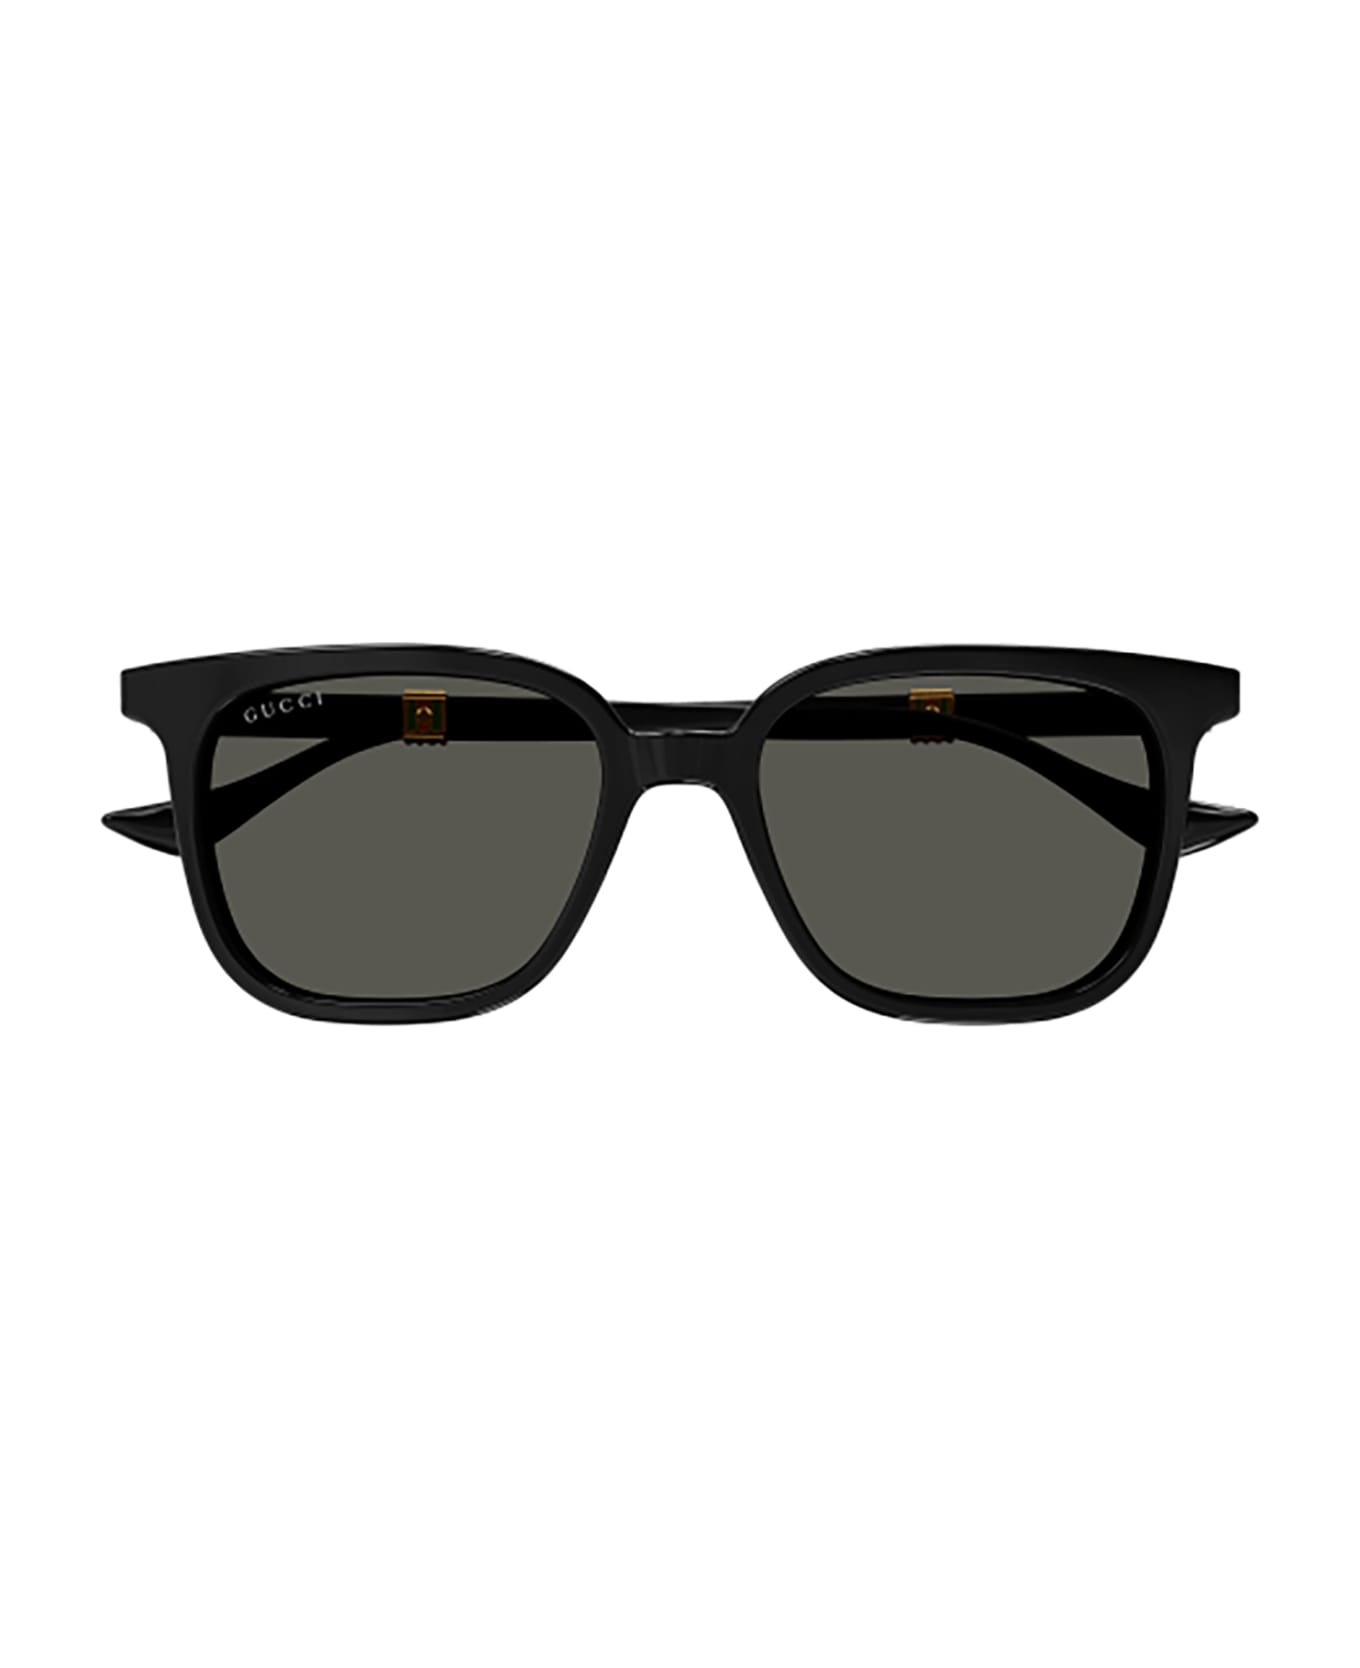 Gucci Eyewear GG1493S Sunglasses - Black Black Grey